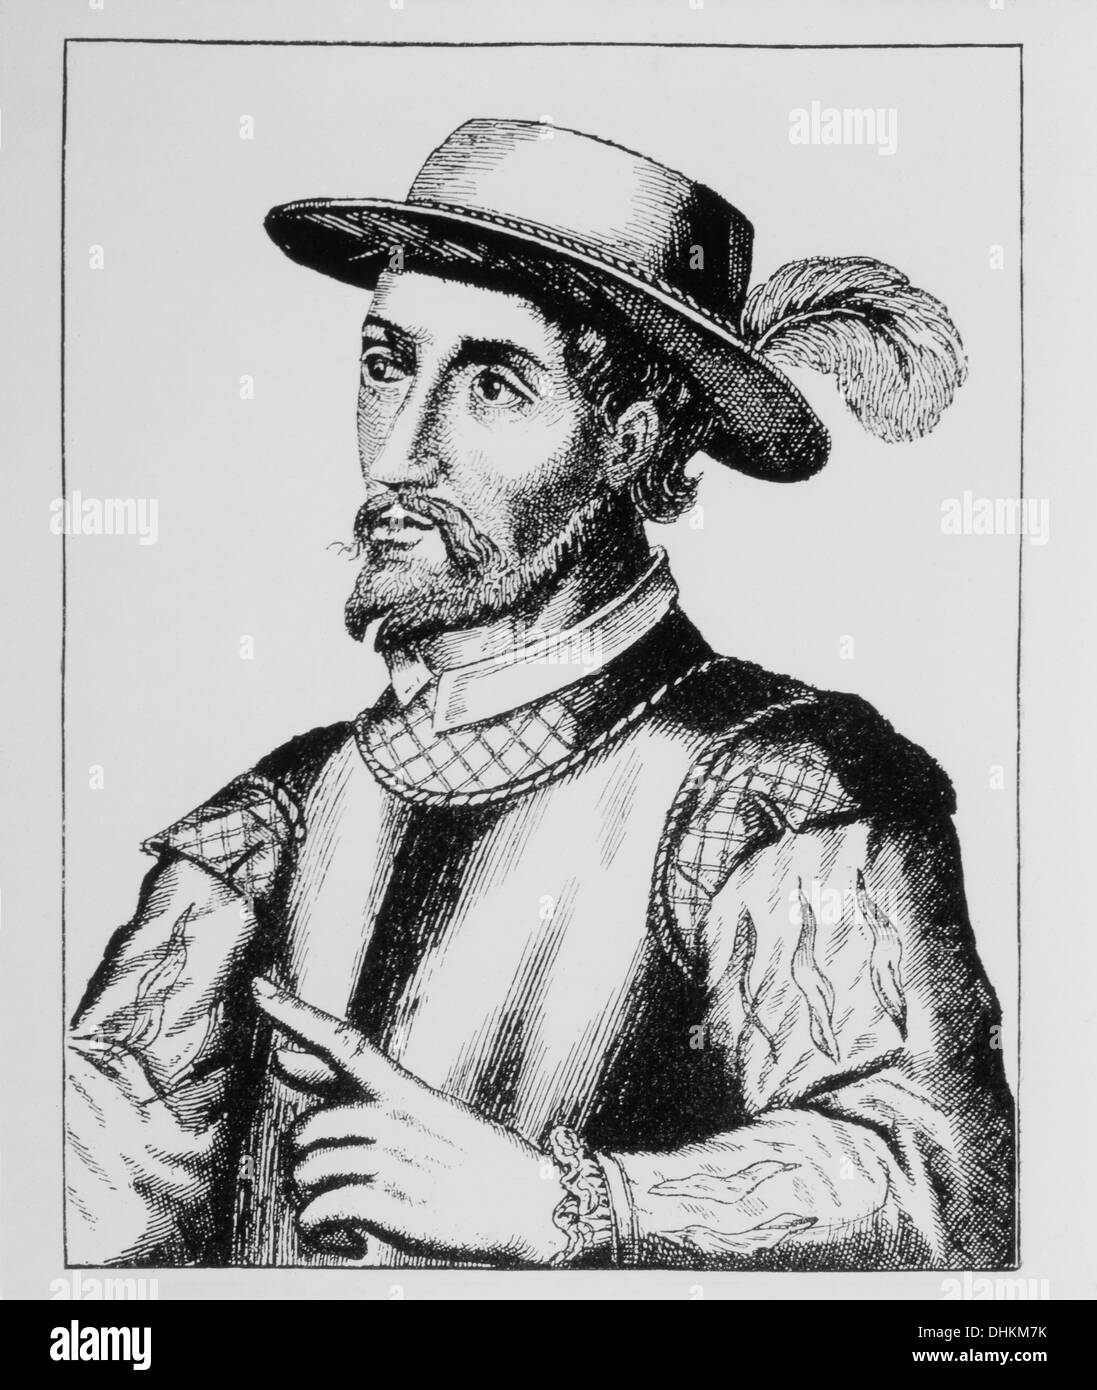 Juan Ponce de Leon (1474-1521), Spanish Explorer, Discover of Florida, Portrait Stock Photo